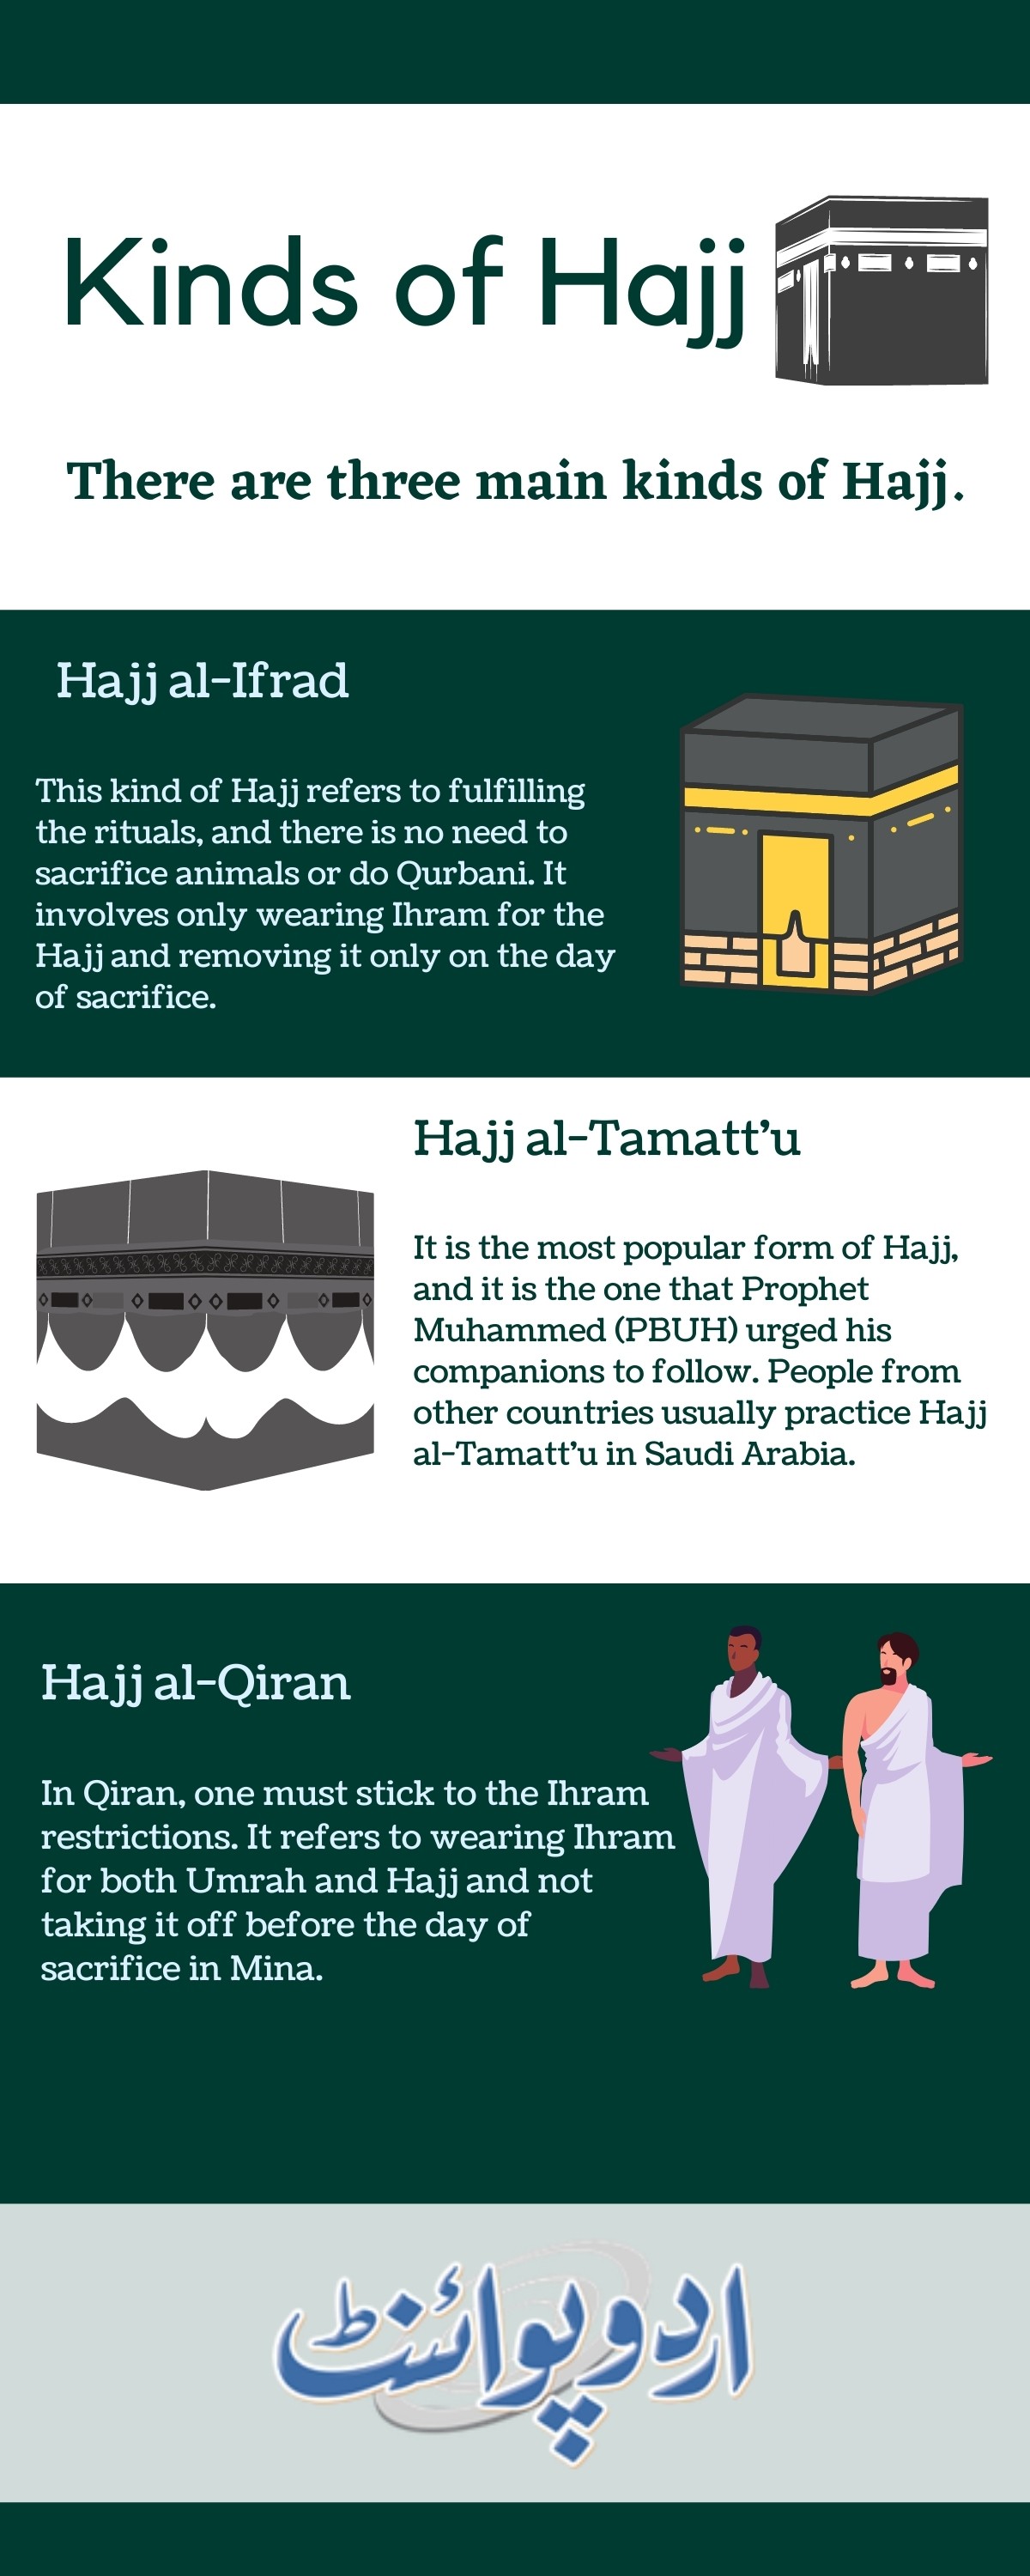 Kinds of Hajj